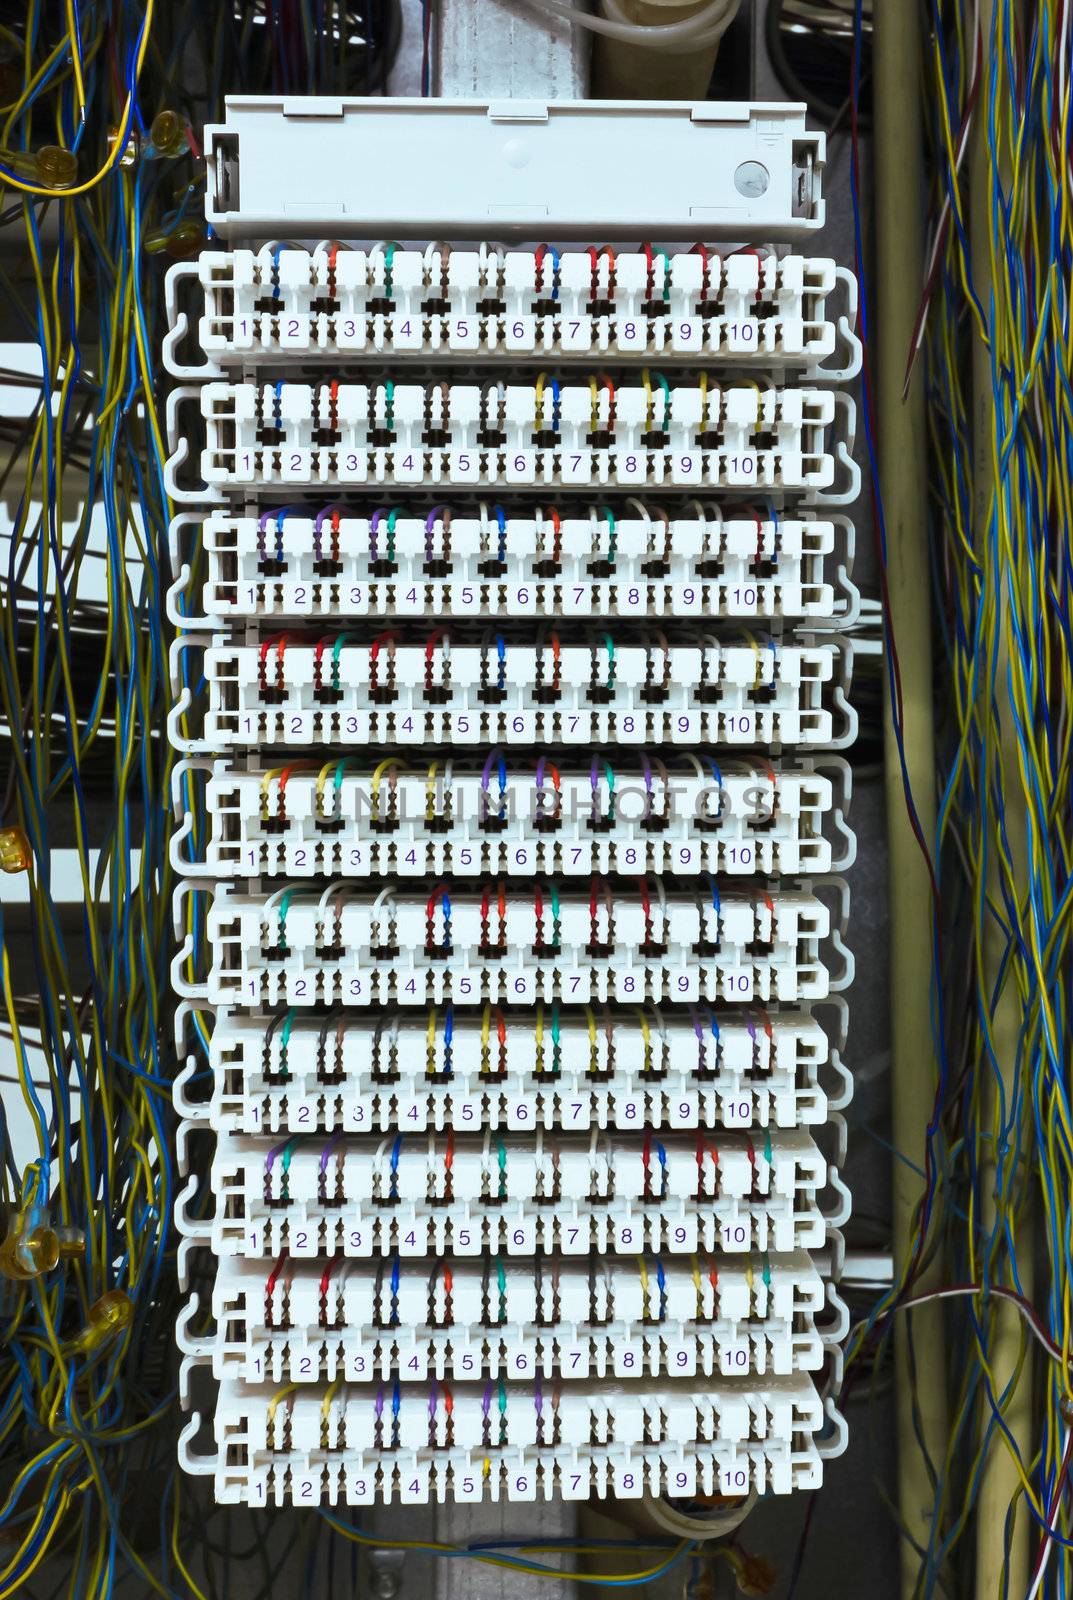 Communication control circuit panel. by sutipp11